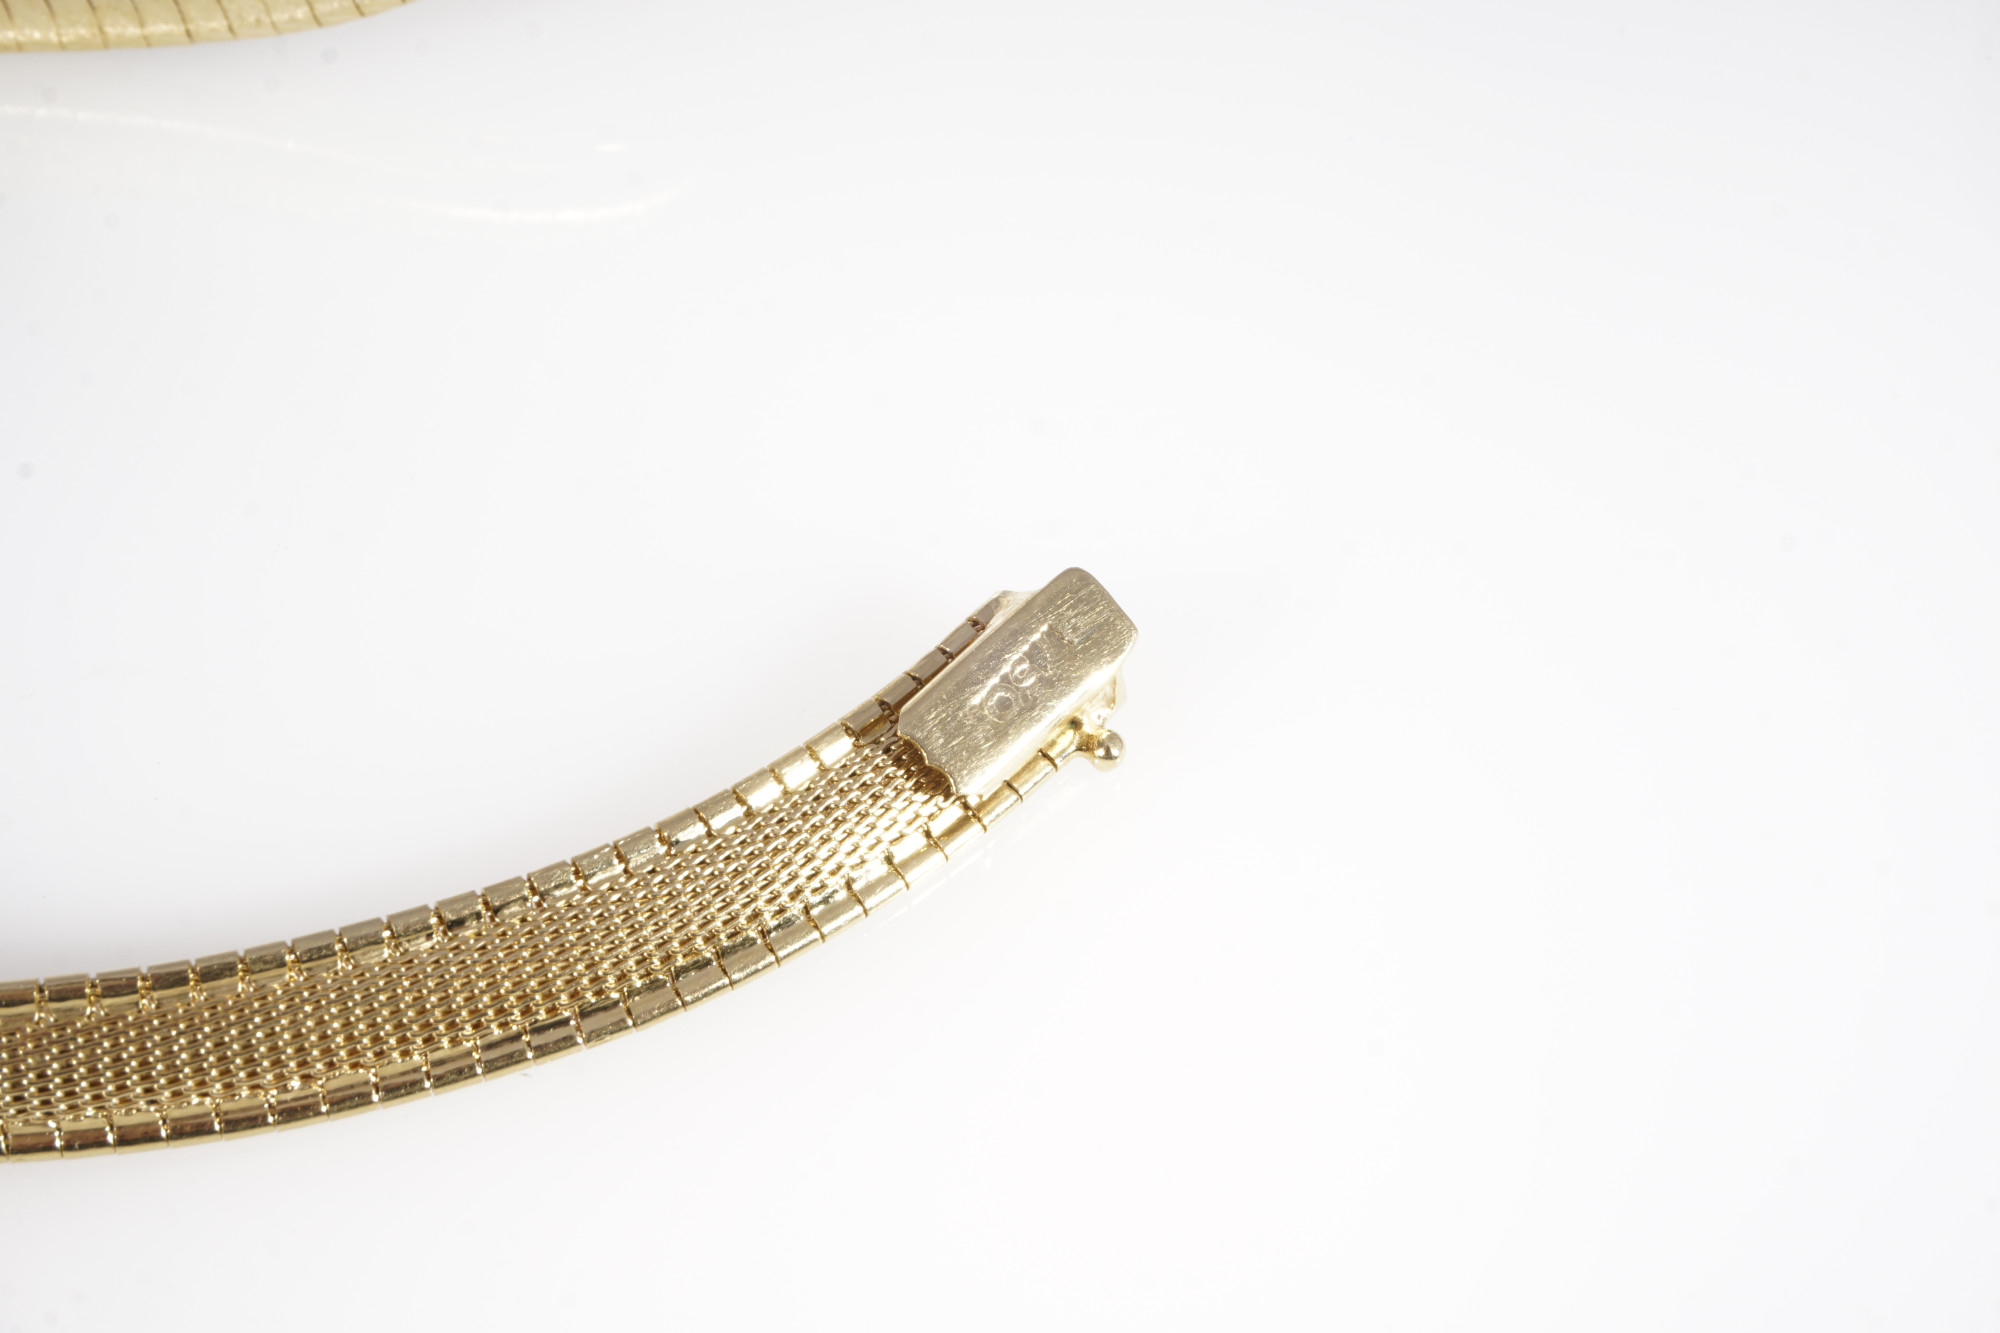 750 jewelry set - gold necklace and bracelet, 18K Gold Schmuckset - Collier und Armband, - Image 5 of 5